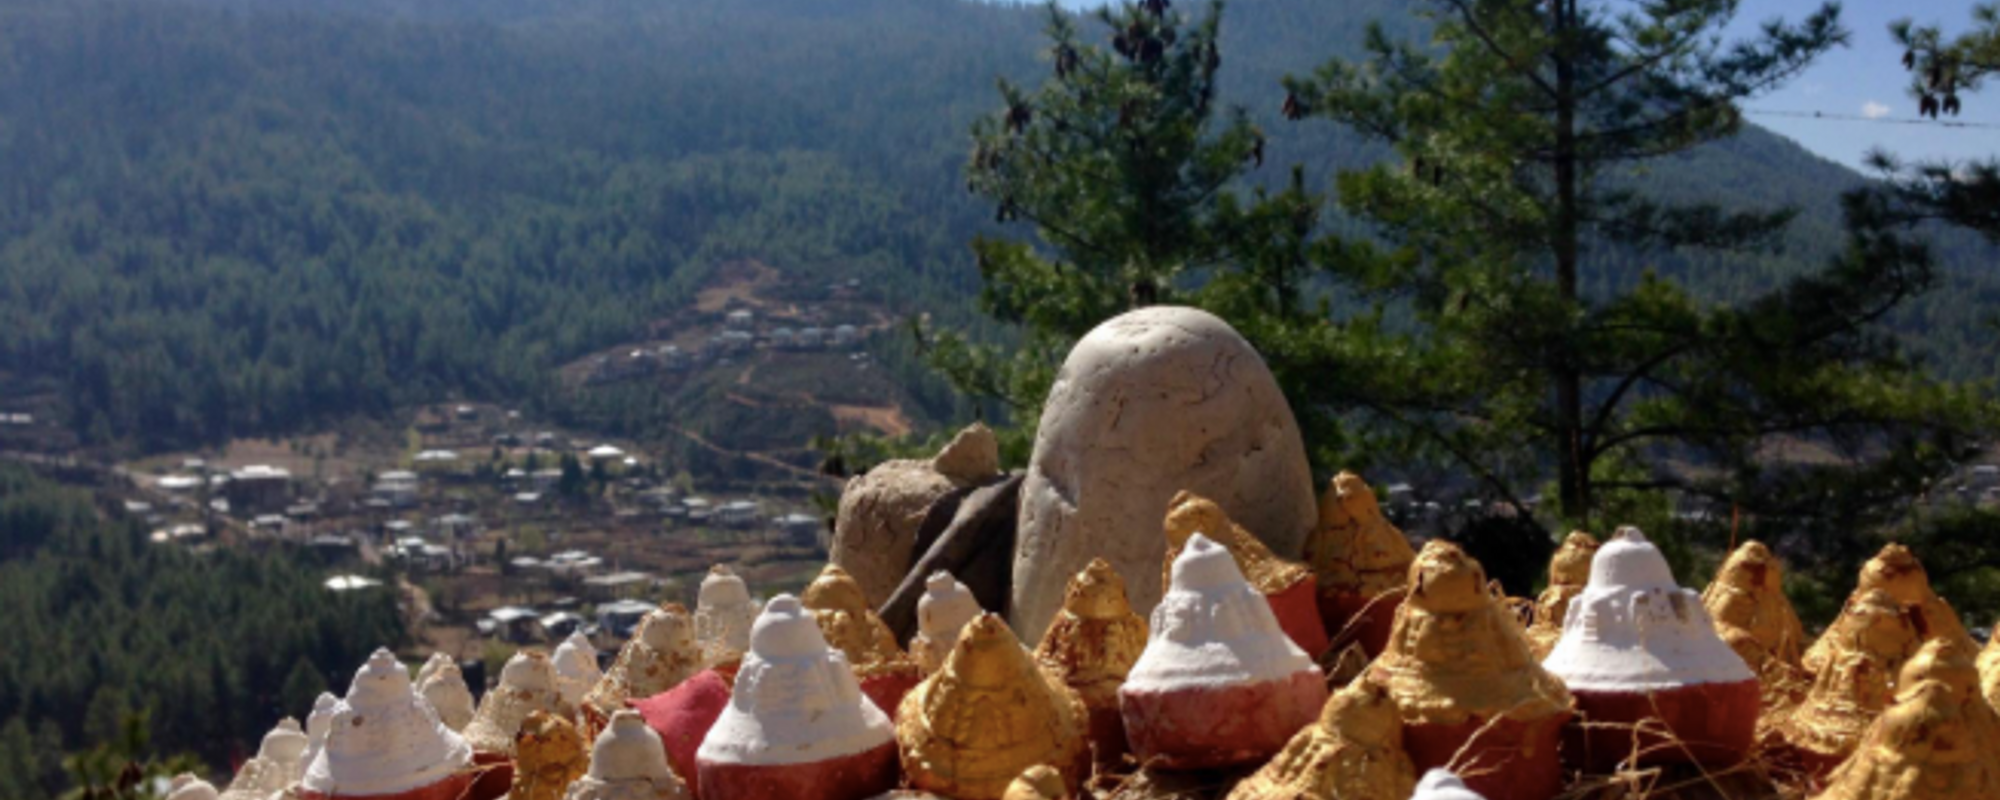 Bhutan: the Hidden Himalayan Kingdom of Happiness - photos